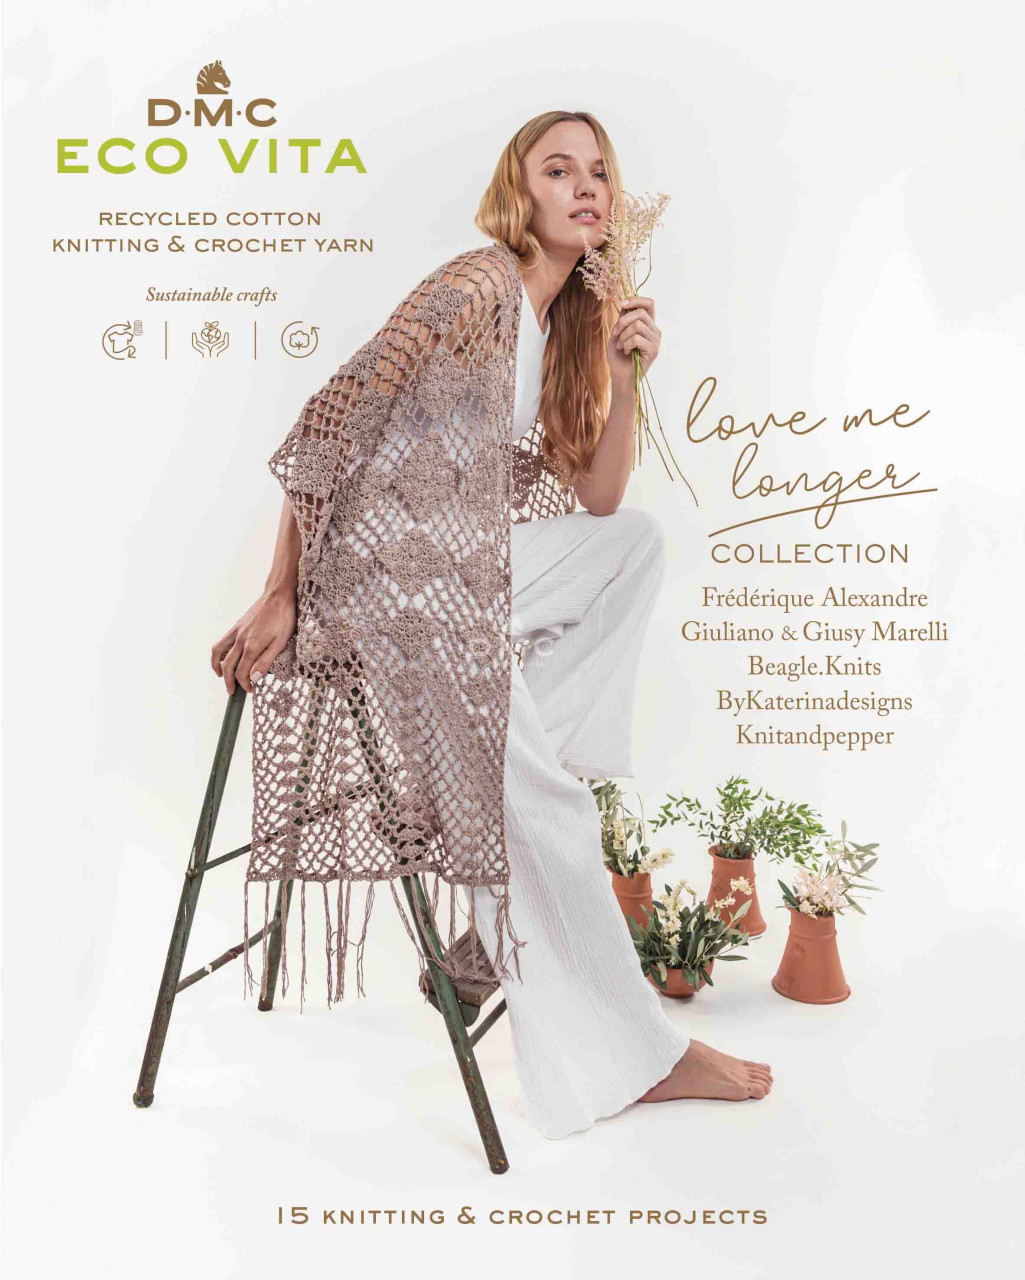 DMC Buch Nova Vita Recycled Cotton